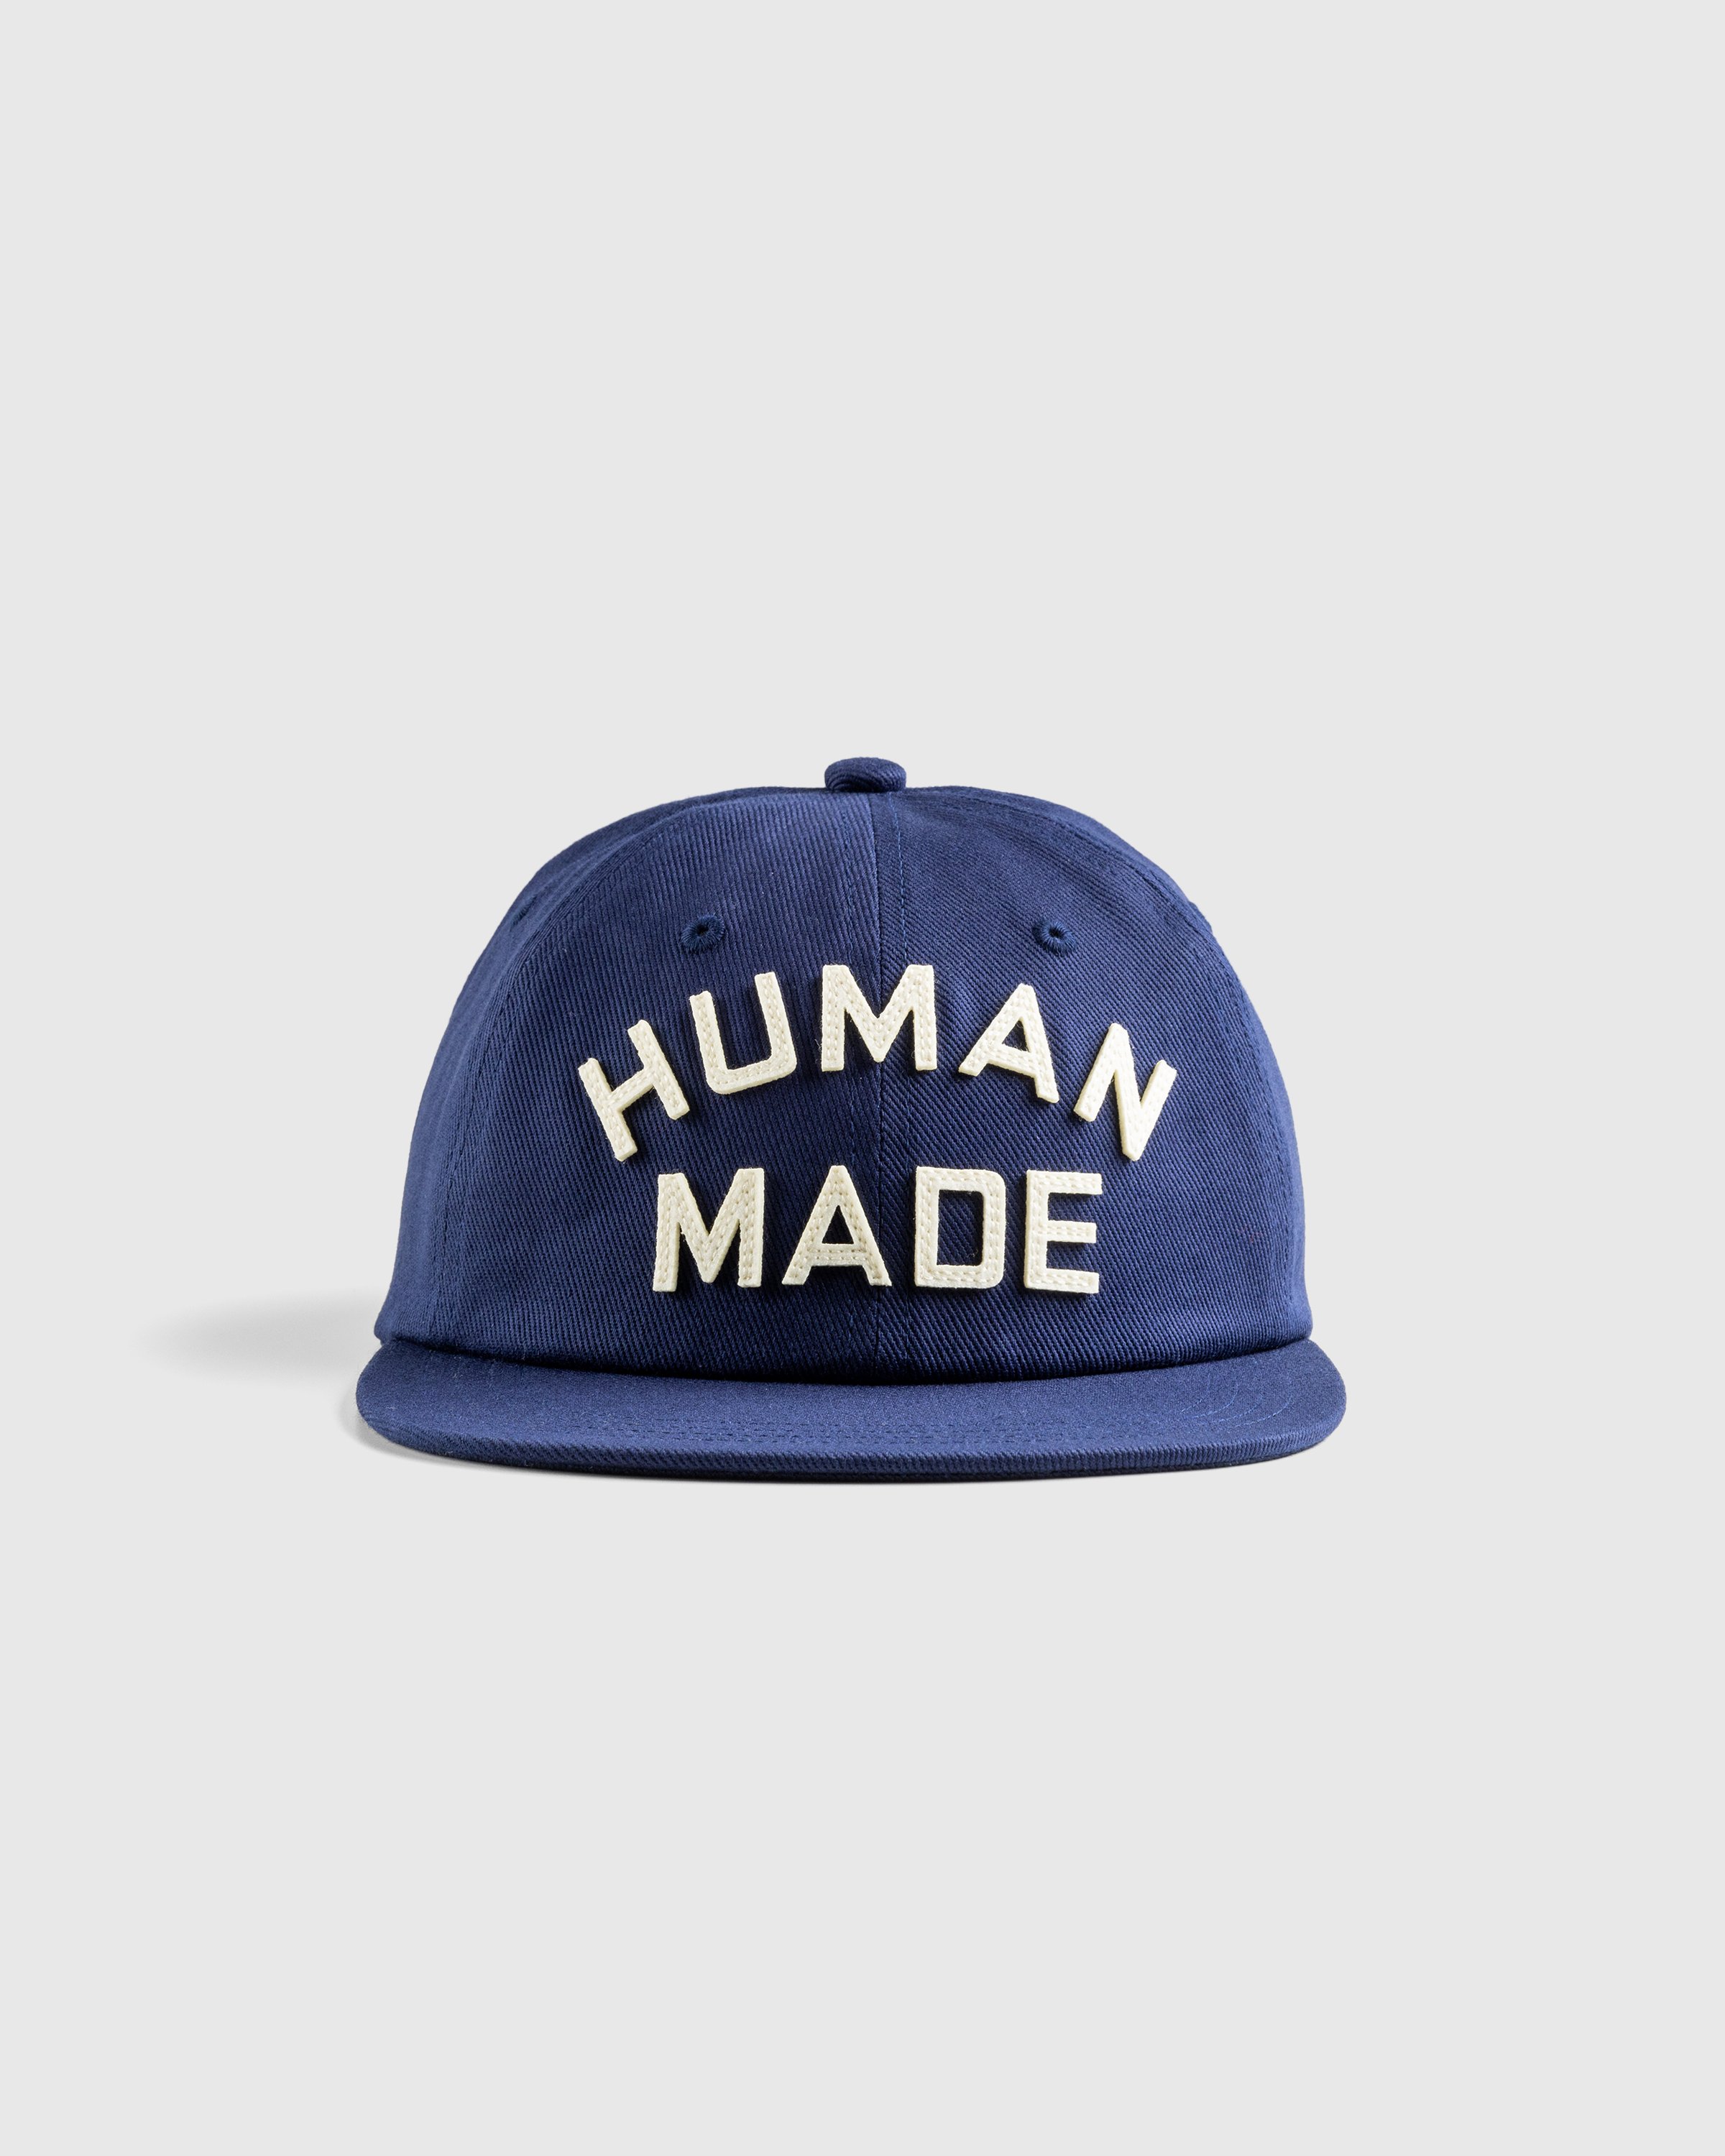 Human Made - BASEBALL CAP NAVY - Accessories - Blue - Image 3